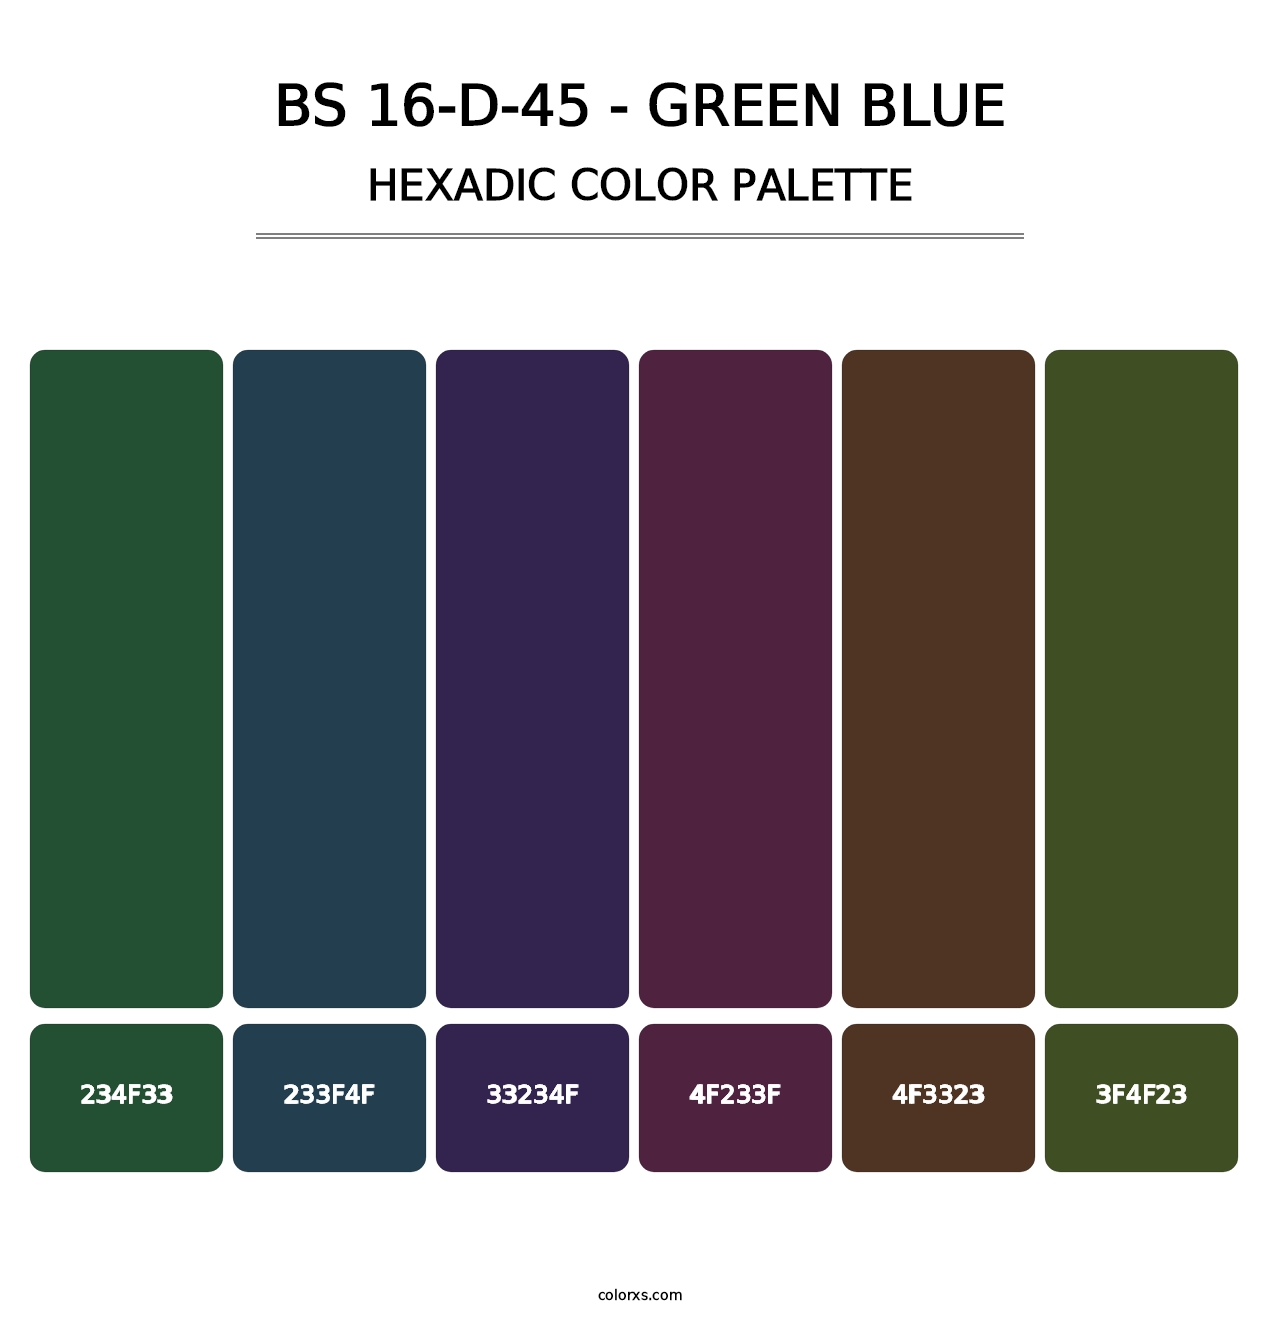 BS 16-D-45 - Green Blue - Hexadic Color Palette